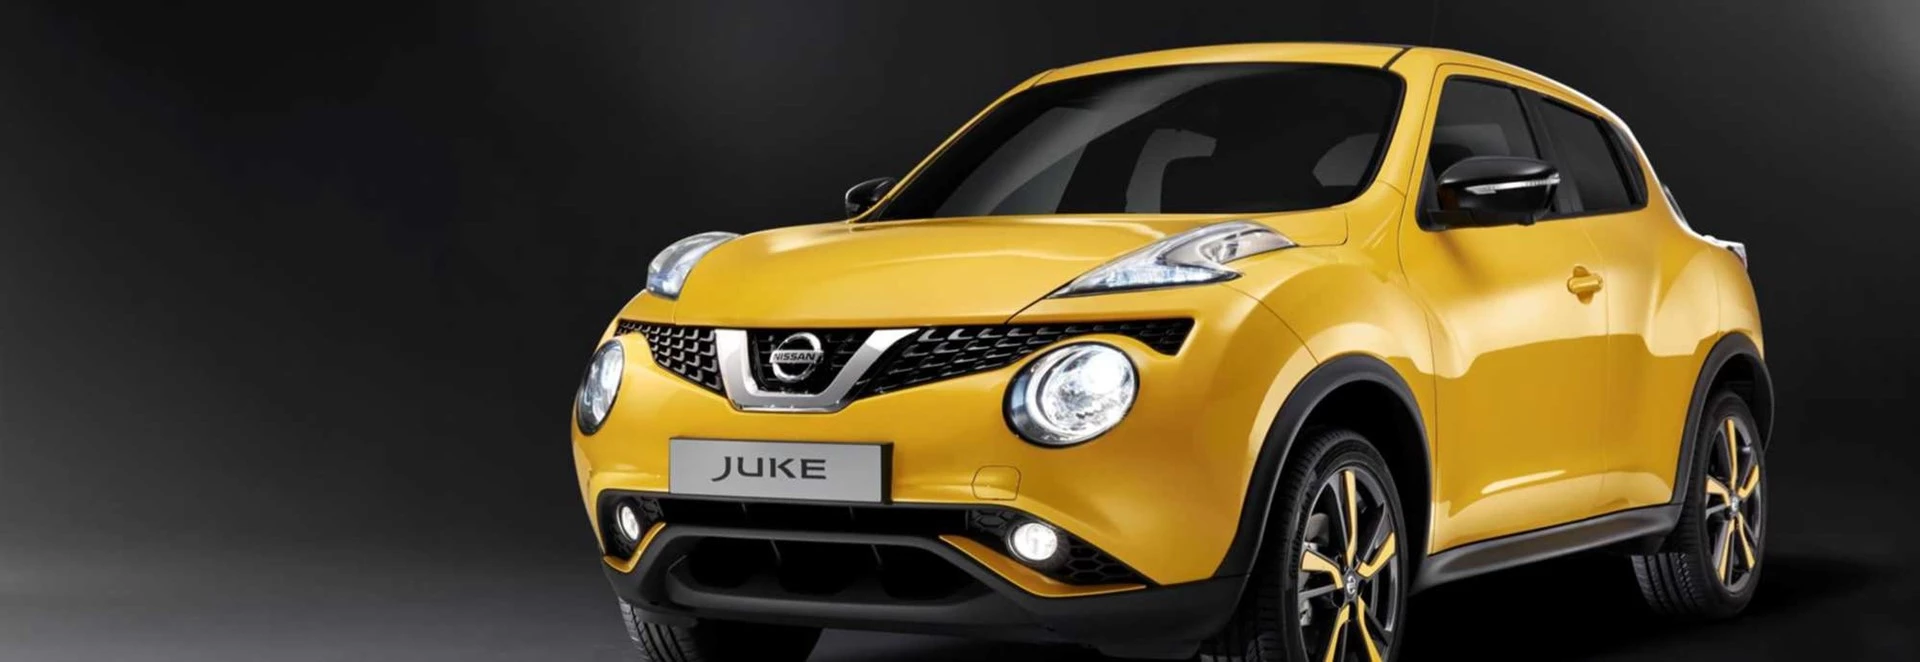 Nissan Juke 1.2 DIG-T Tekna Crossover Review 